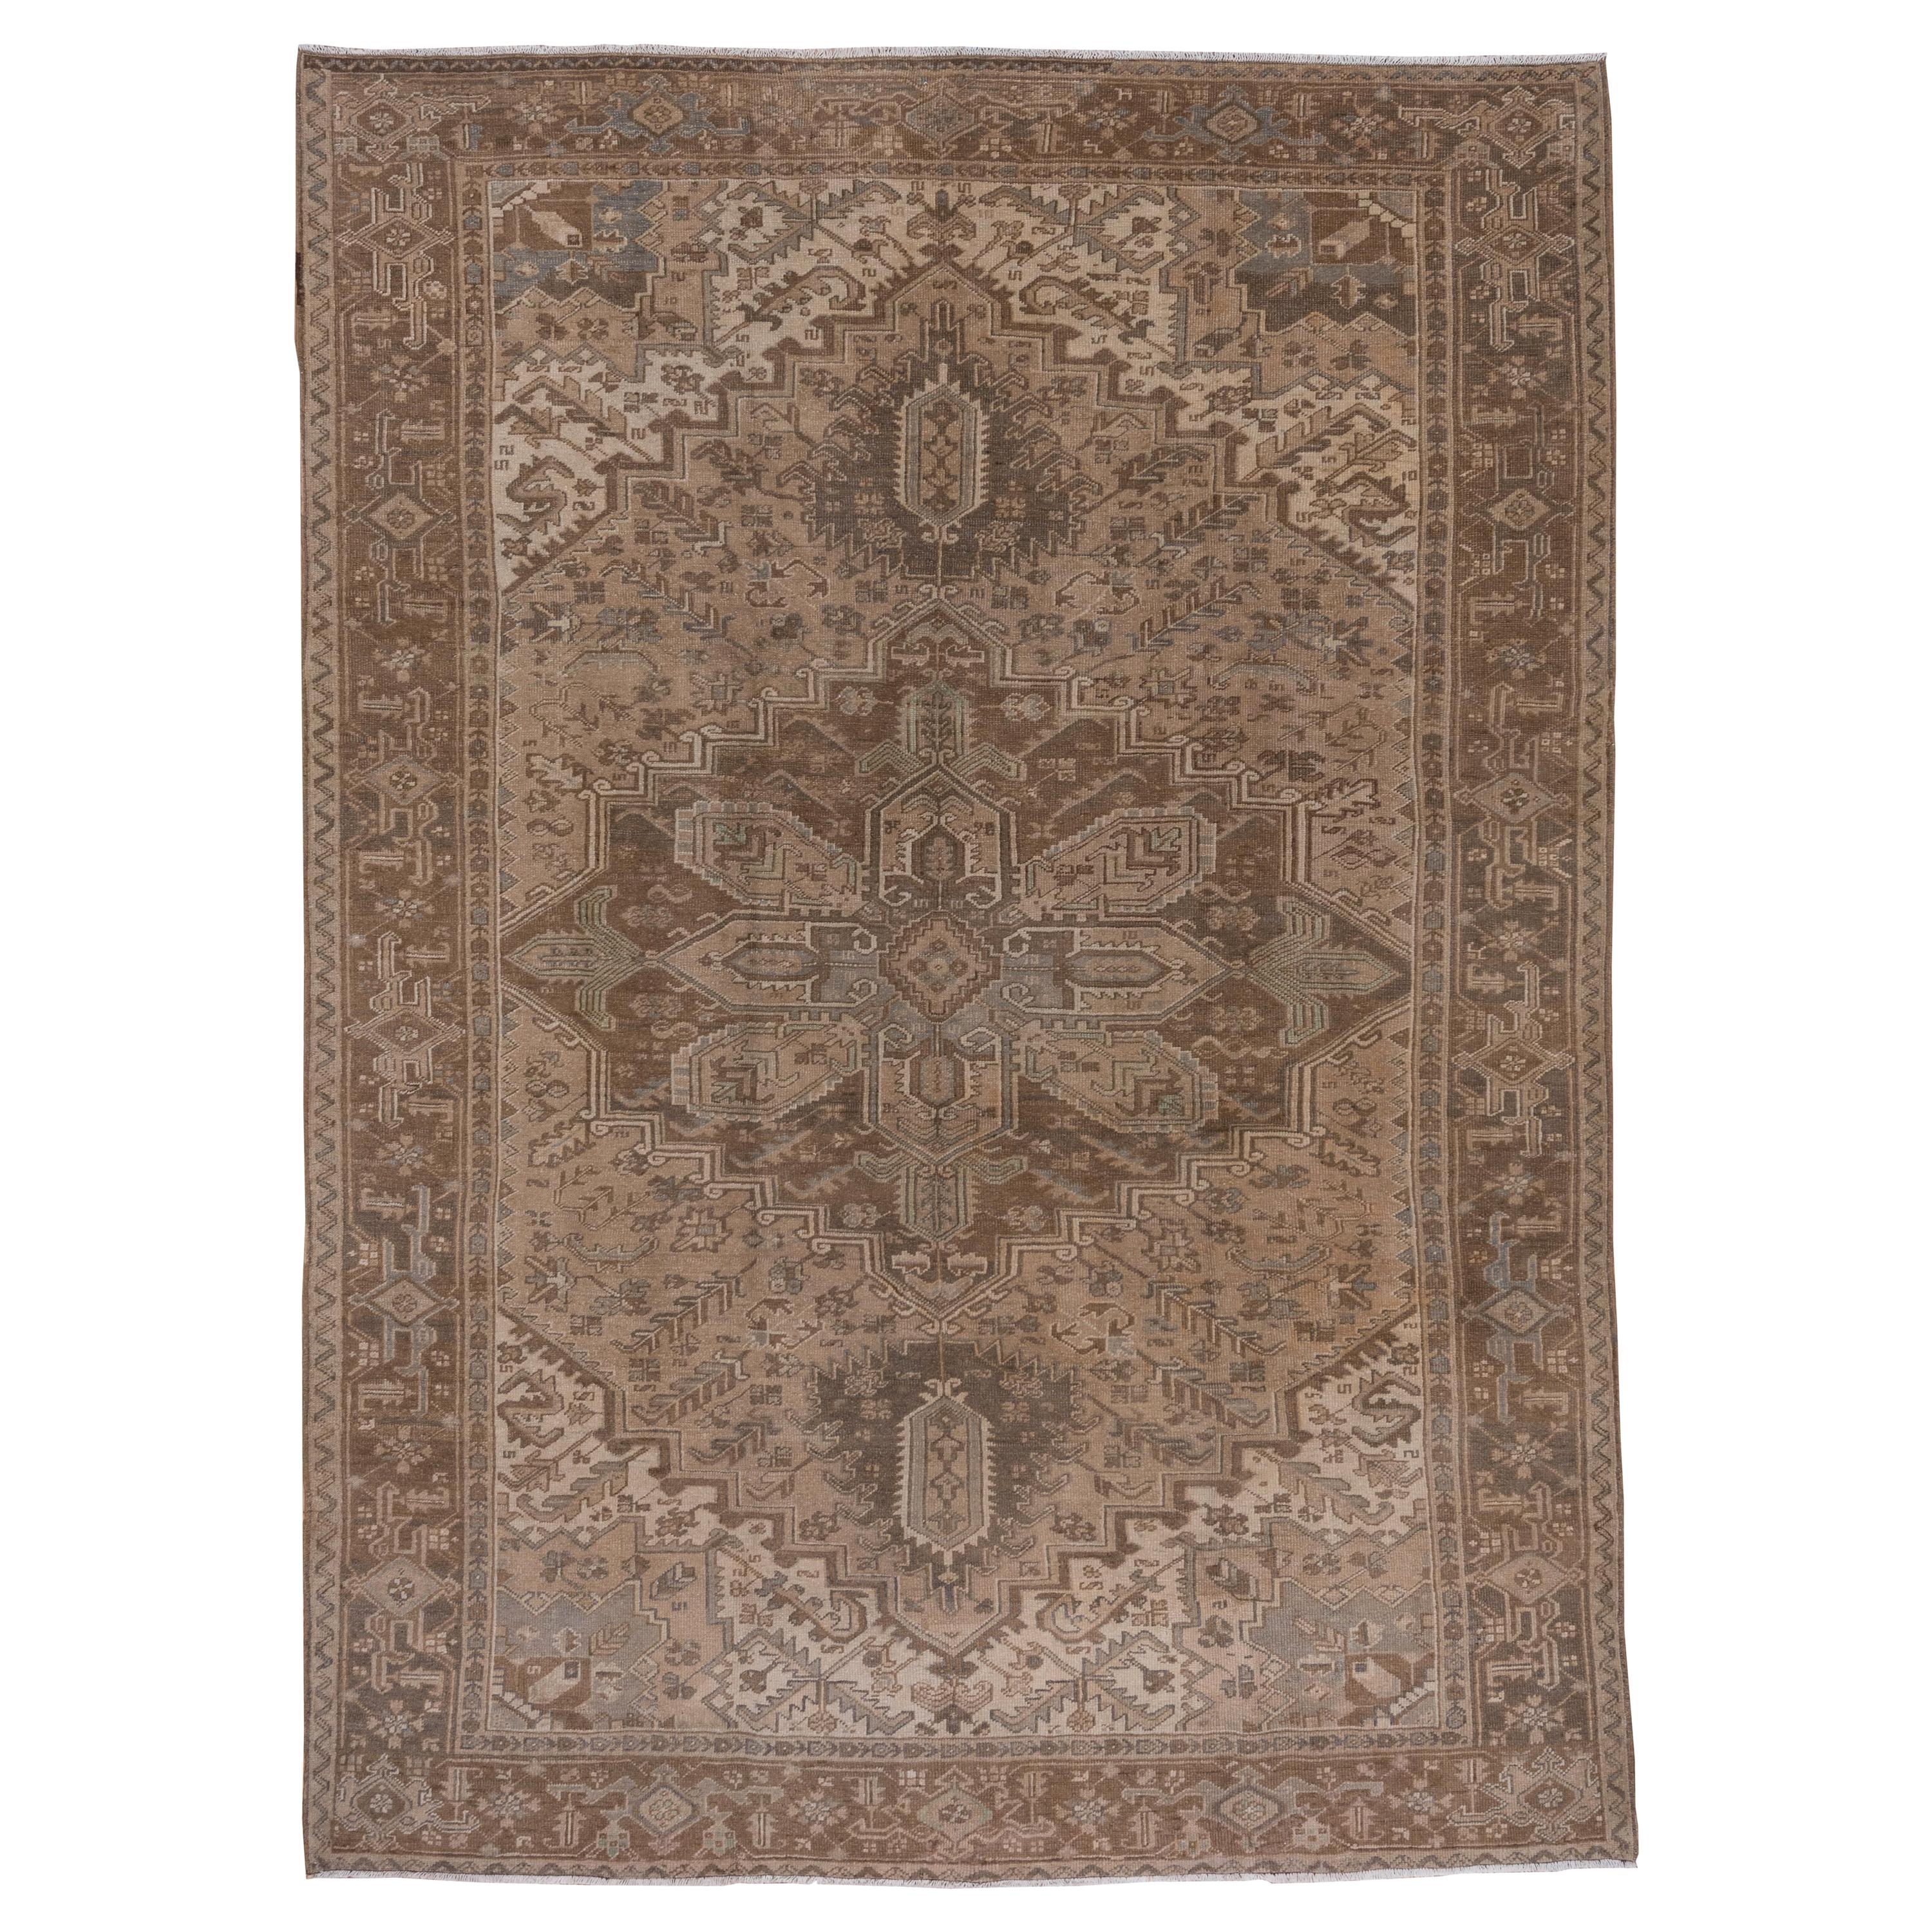 Antique Heriz Carpet with Neutral Palette, circa 1910s